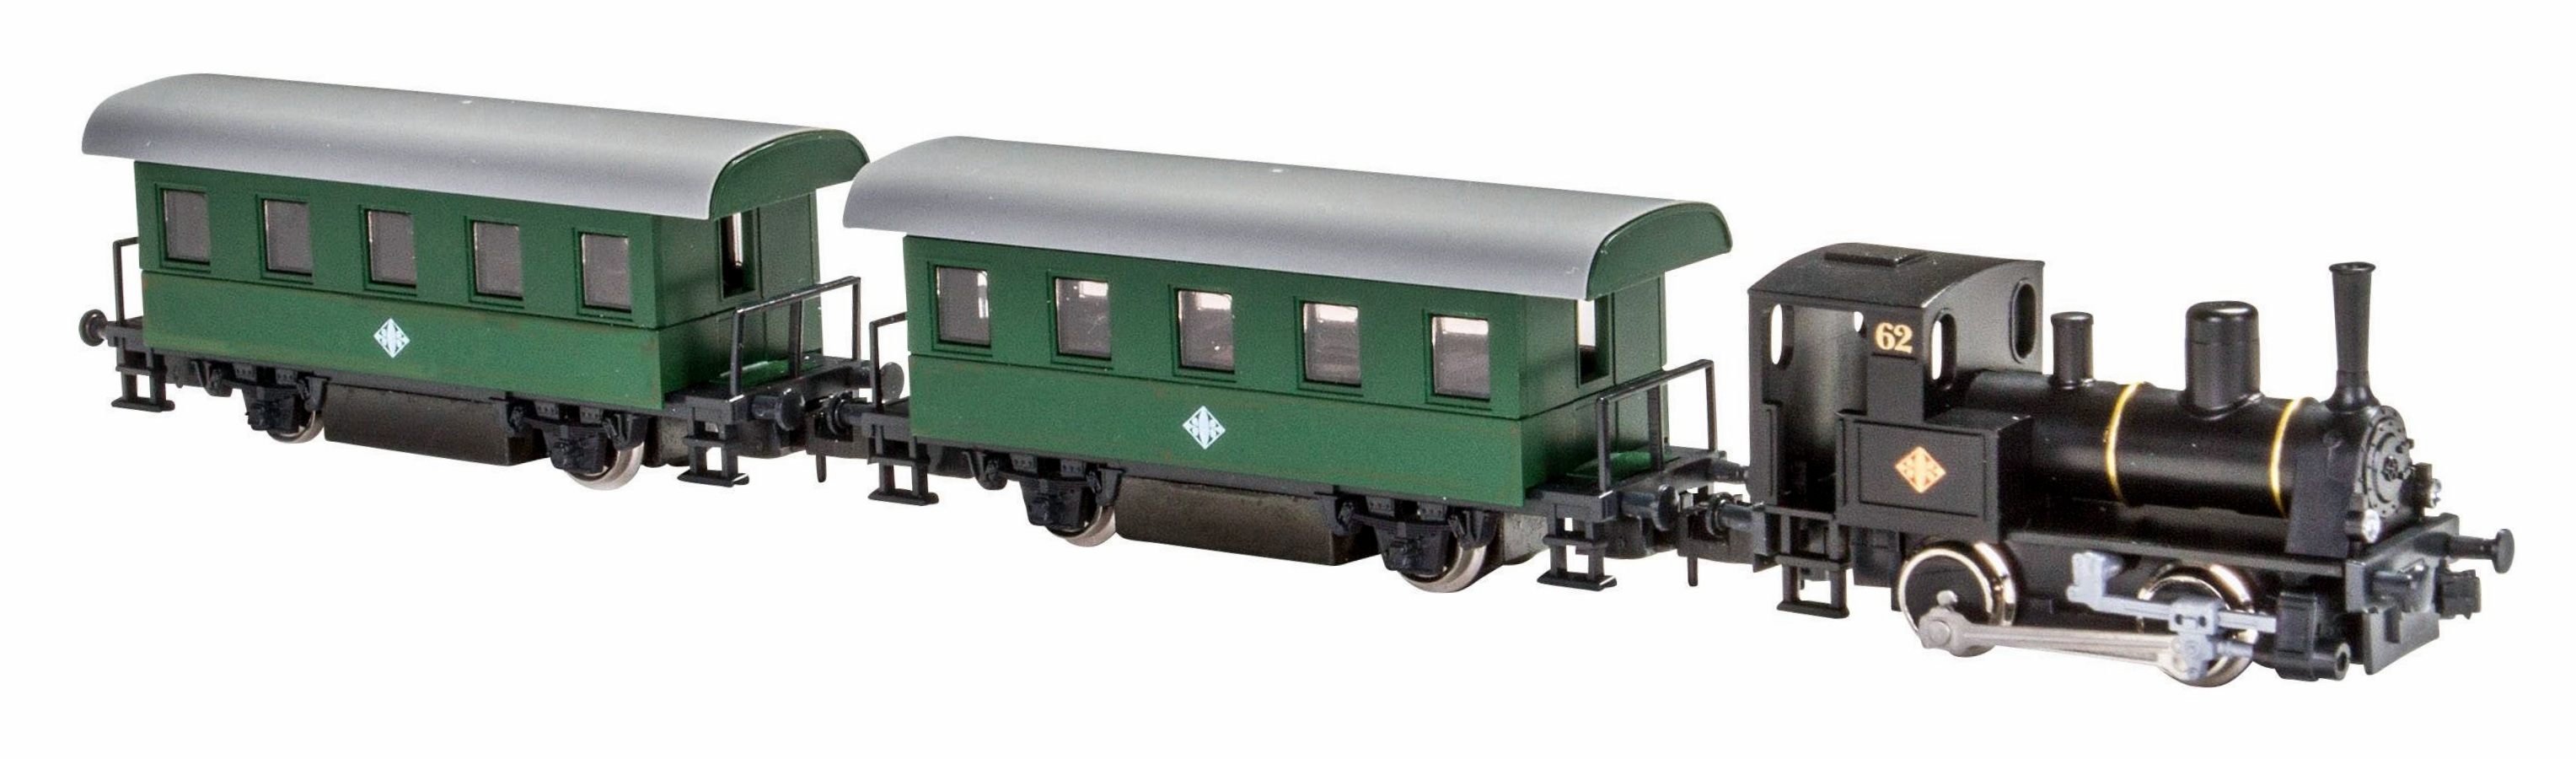 N Scale - Kato Lemke - 10-5003 - Locomotive, Steam, 0-4-0, Bavarian D VI - ÖBB (Austrian Federal Railways) - 62